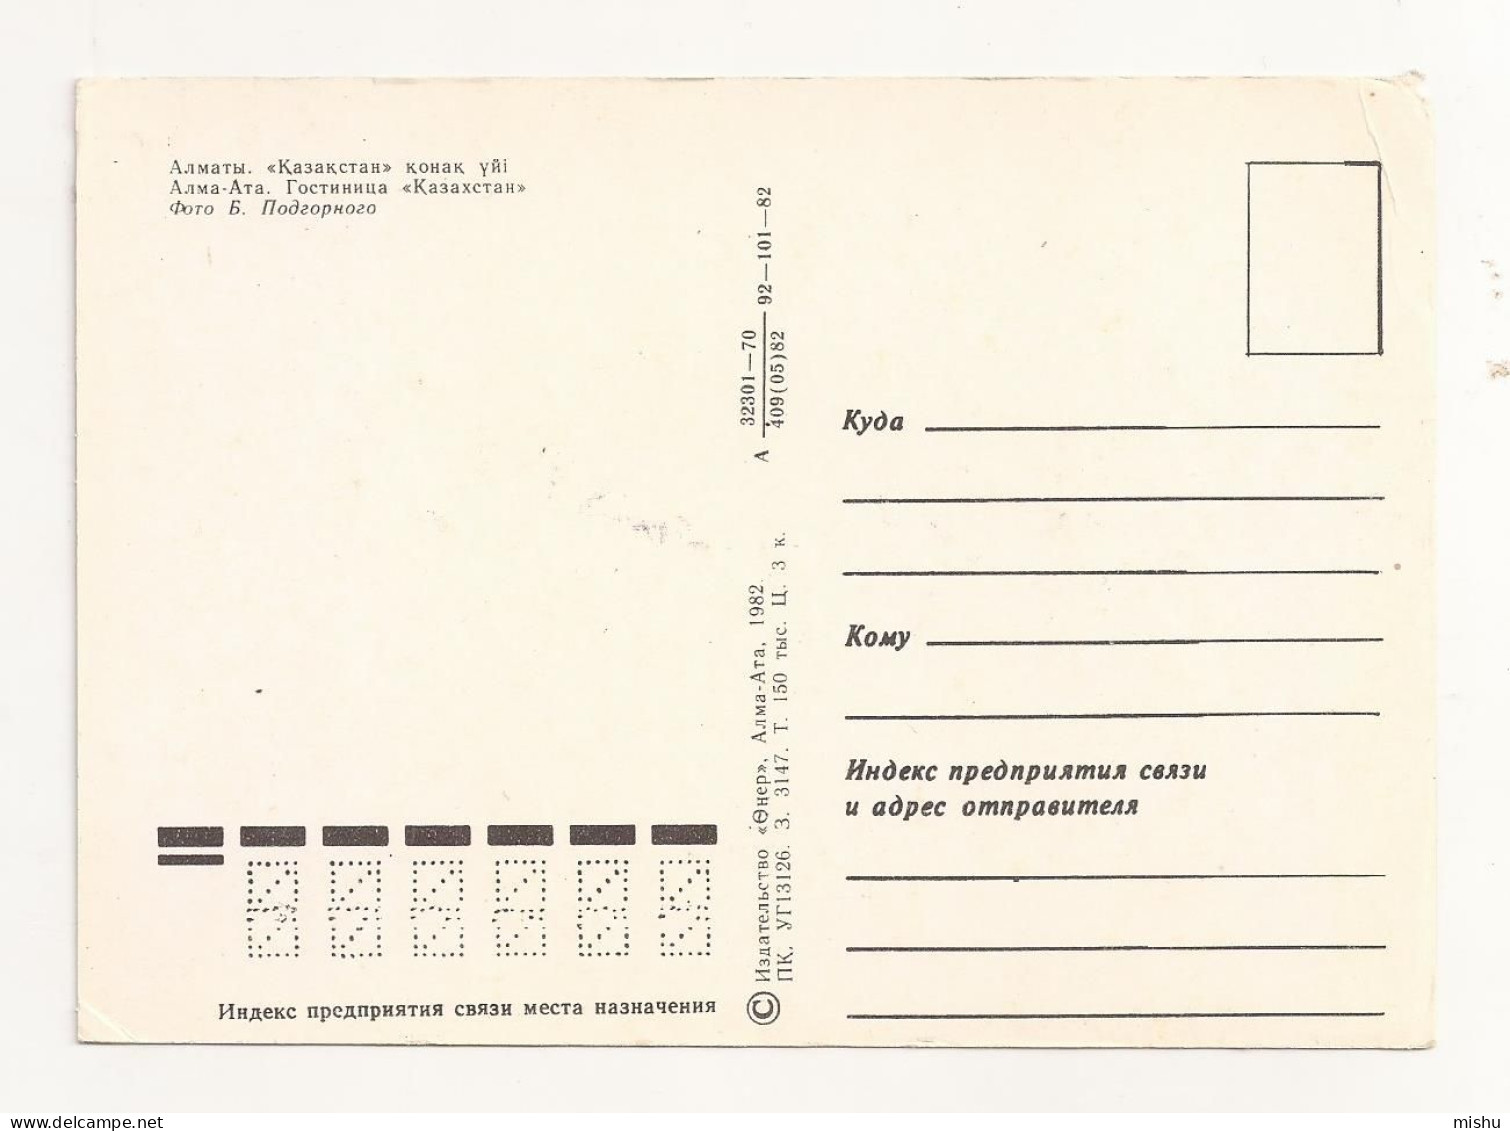 FA38 - Postcard - KAZAKHSTAN - Hotel Kazakhtan, Uncirculated 1982 - Kazachstan